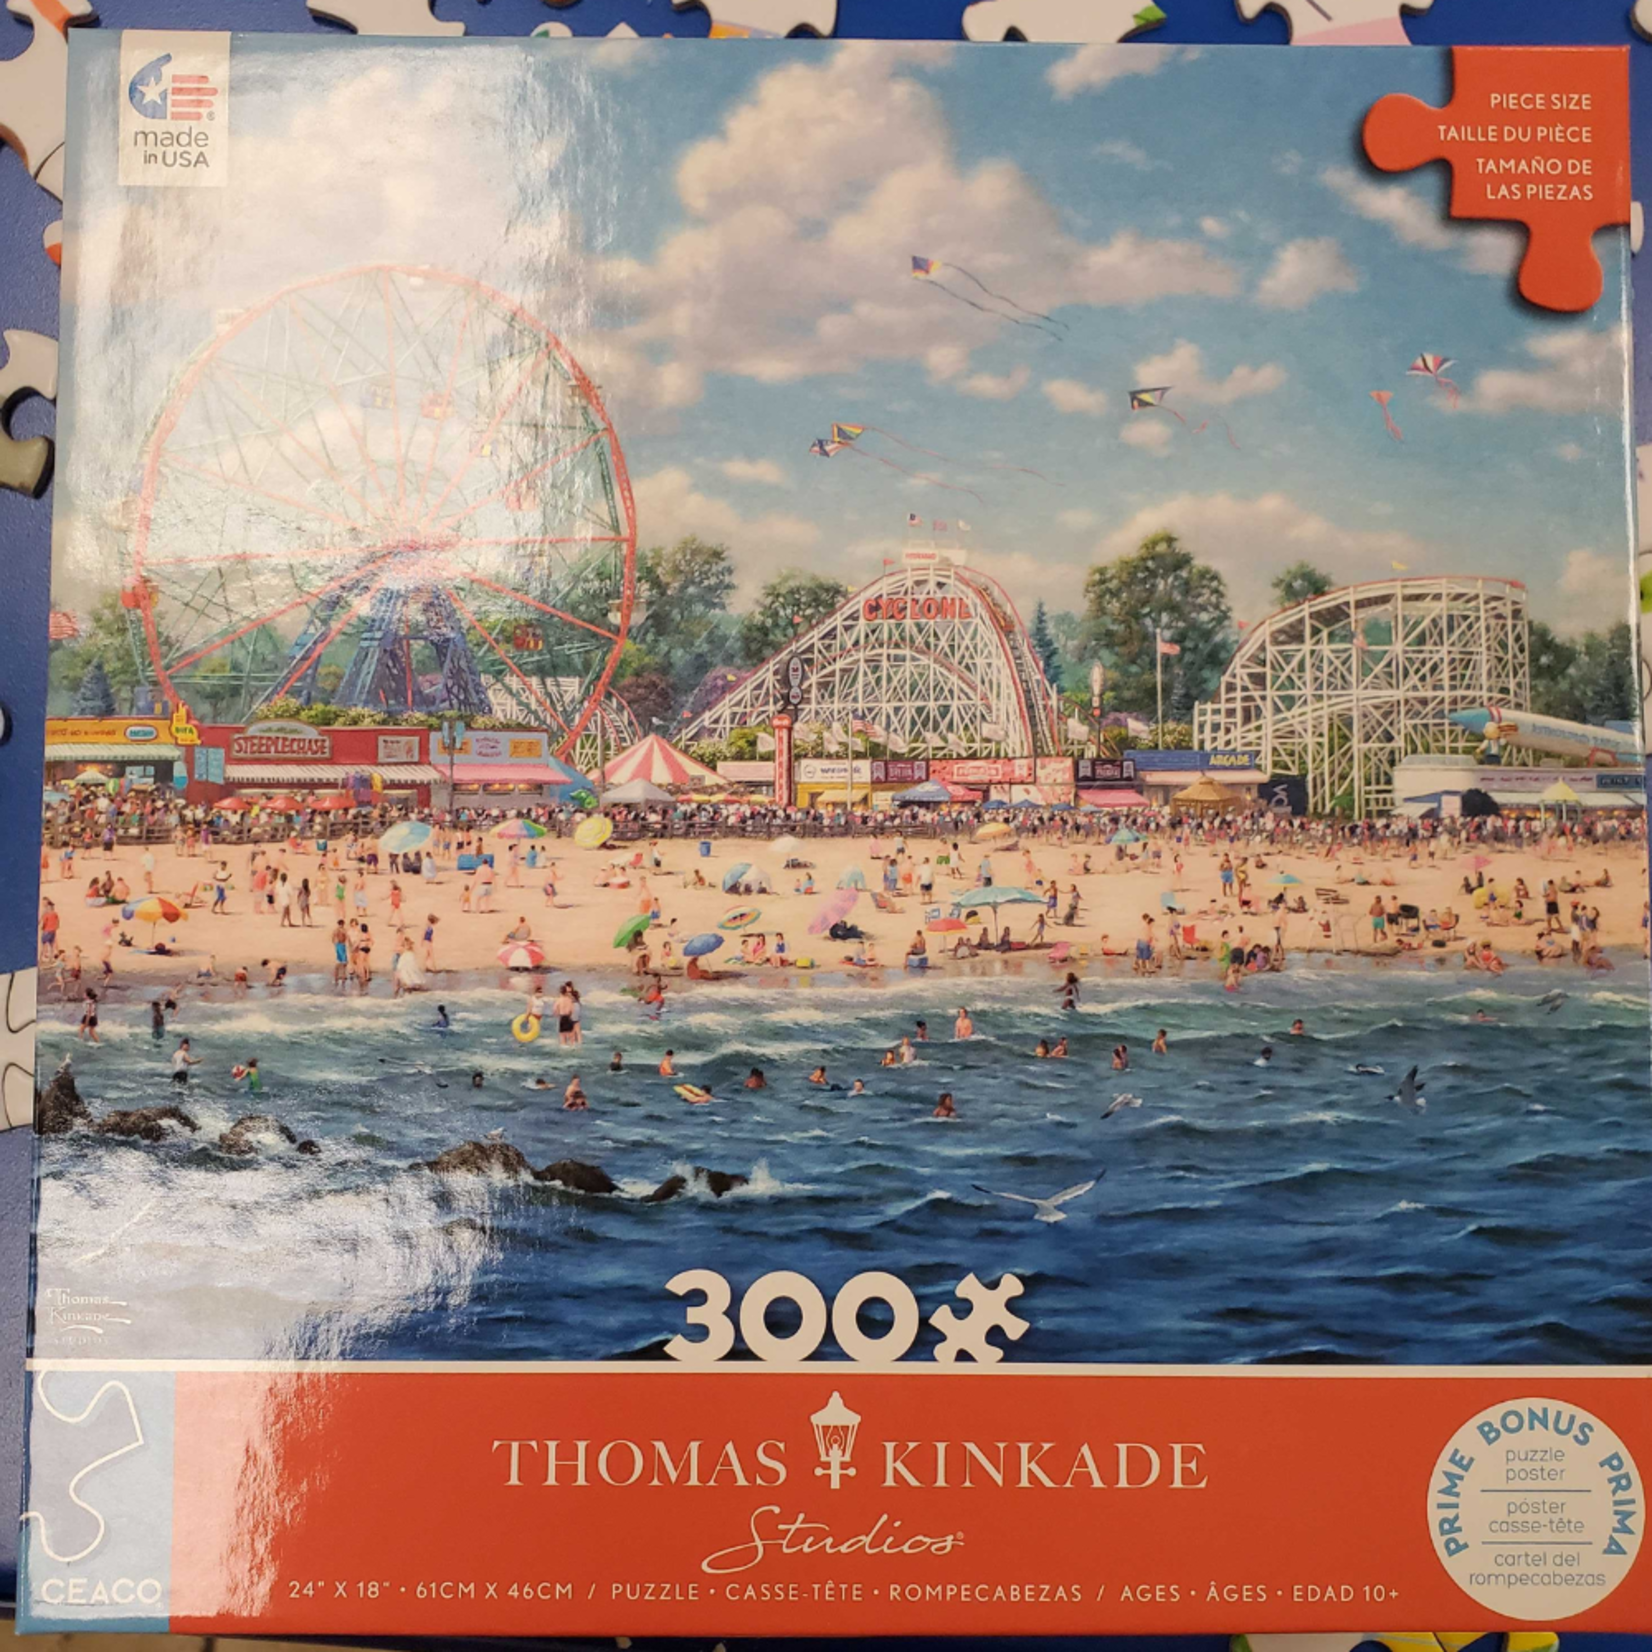 Ceaco Coney Island by Thomas Kinkade, 300-Piece Jigsaw Puzzle